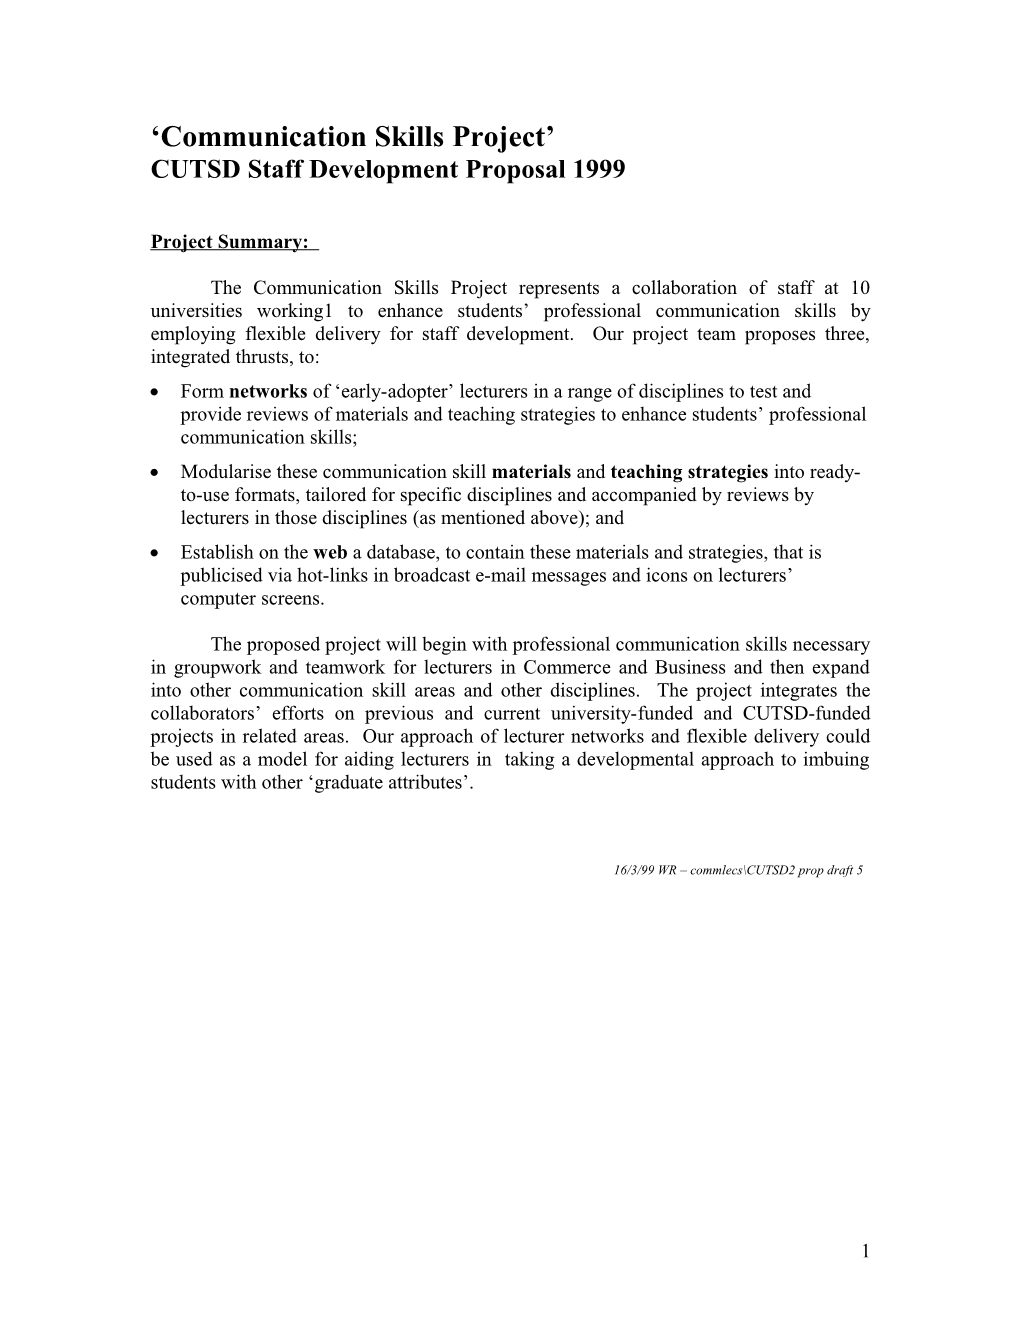 CUTSD Staff Development Proposal 1999